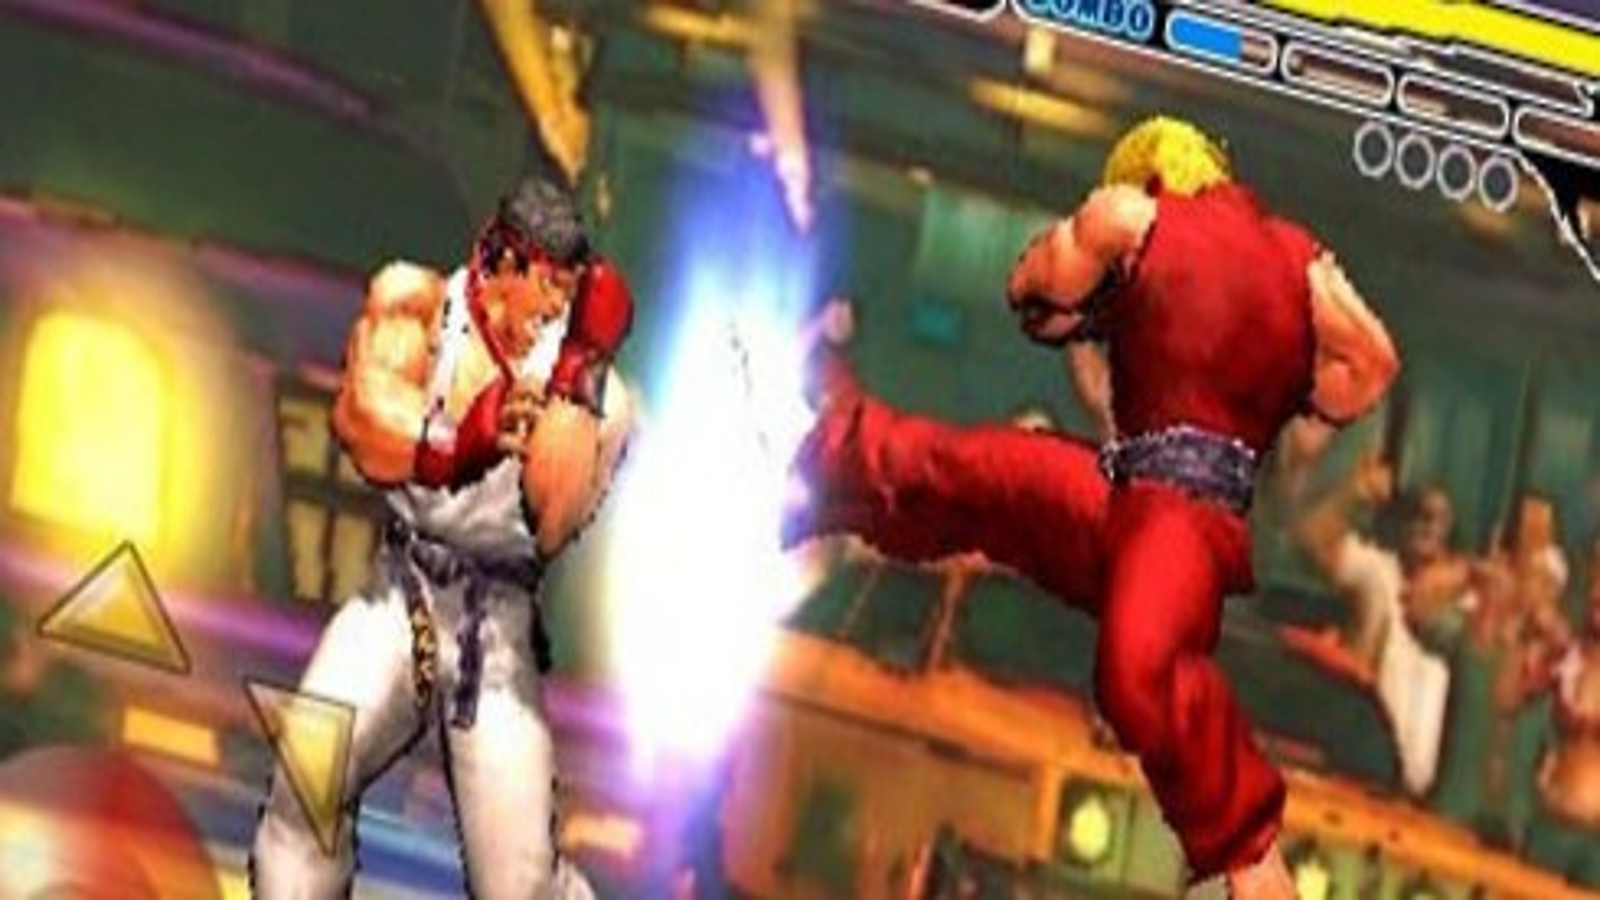 Street Fighter V: Arcade Edition - Blanka Gameplay Trailer - IGN